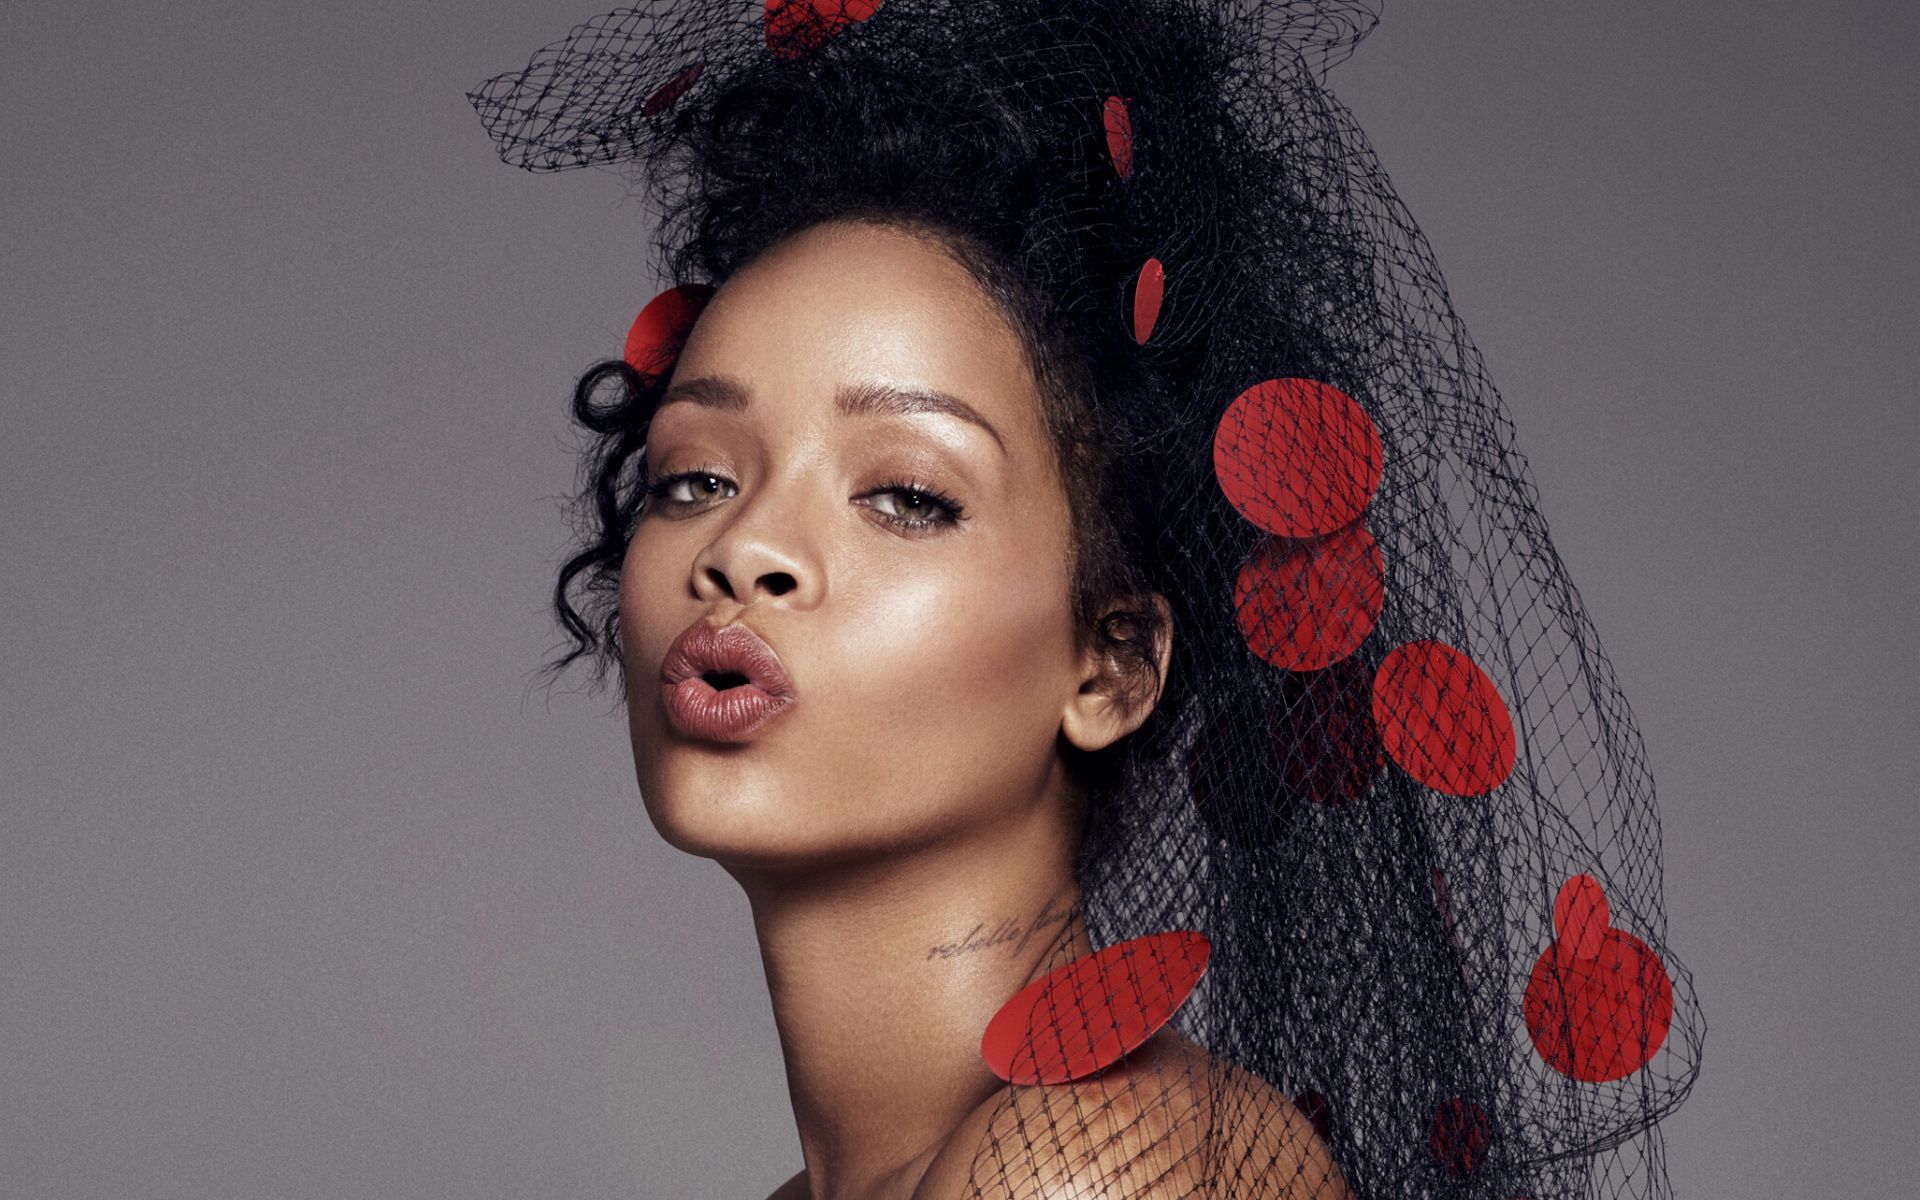  Rihanna Hintergrundbild 1920x1200. Rihanna 4K wallpaper for your desktop or mobile screen free and easy to download